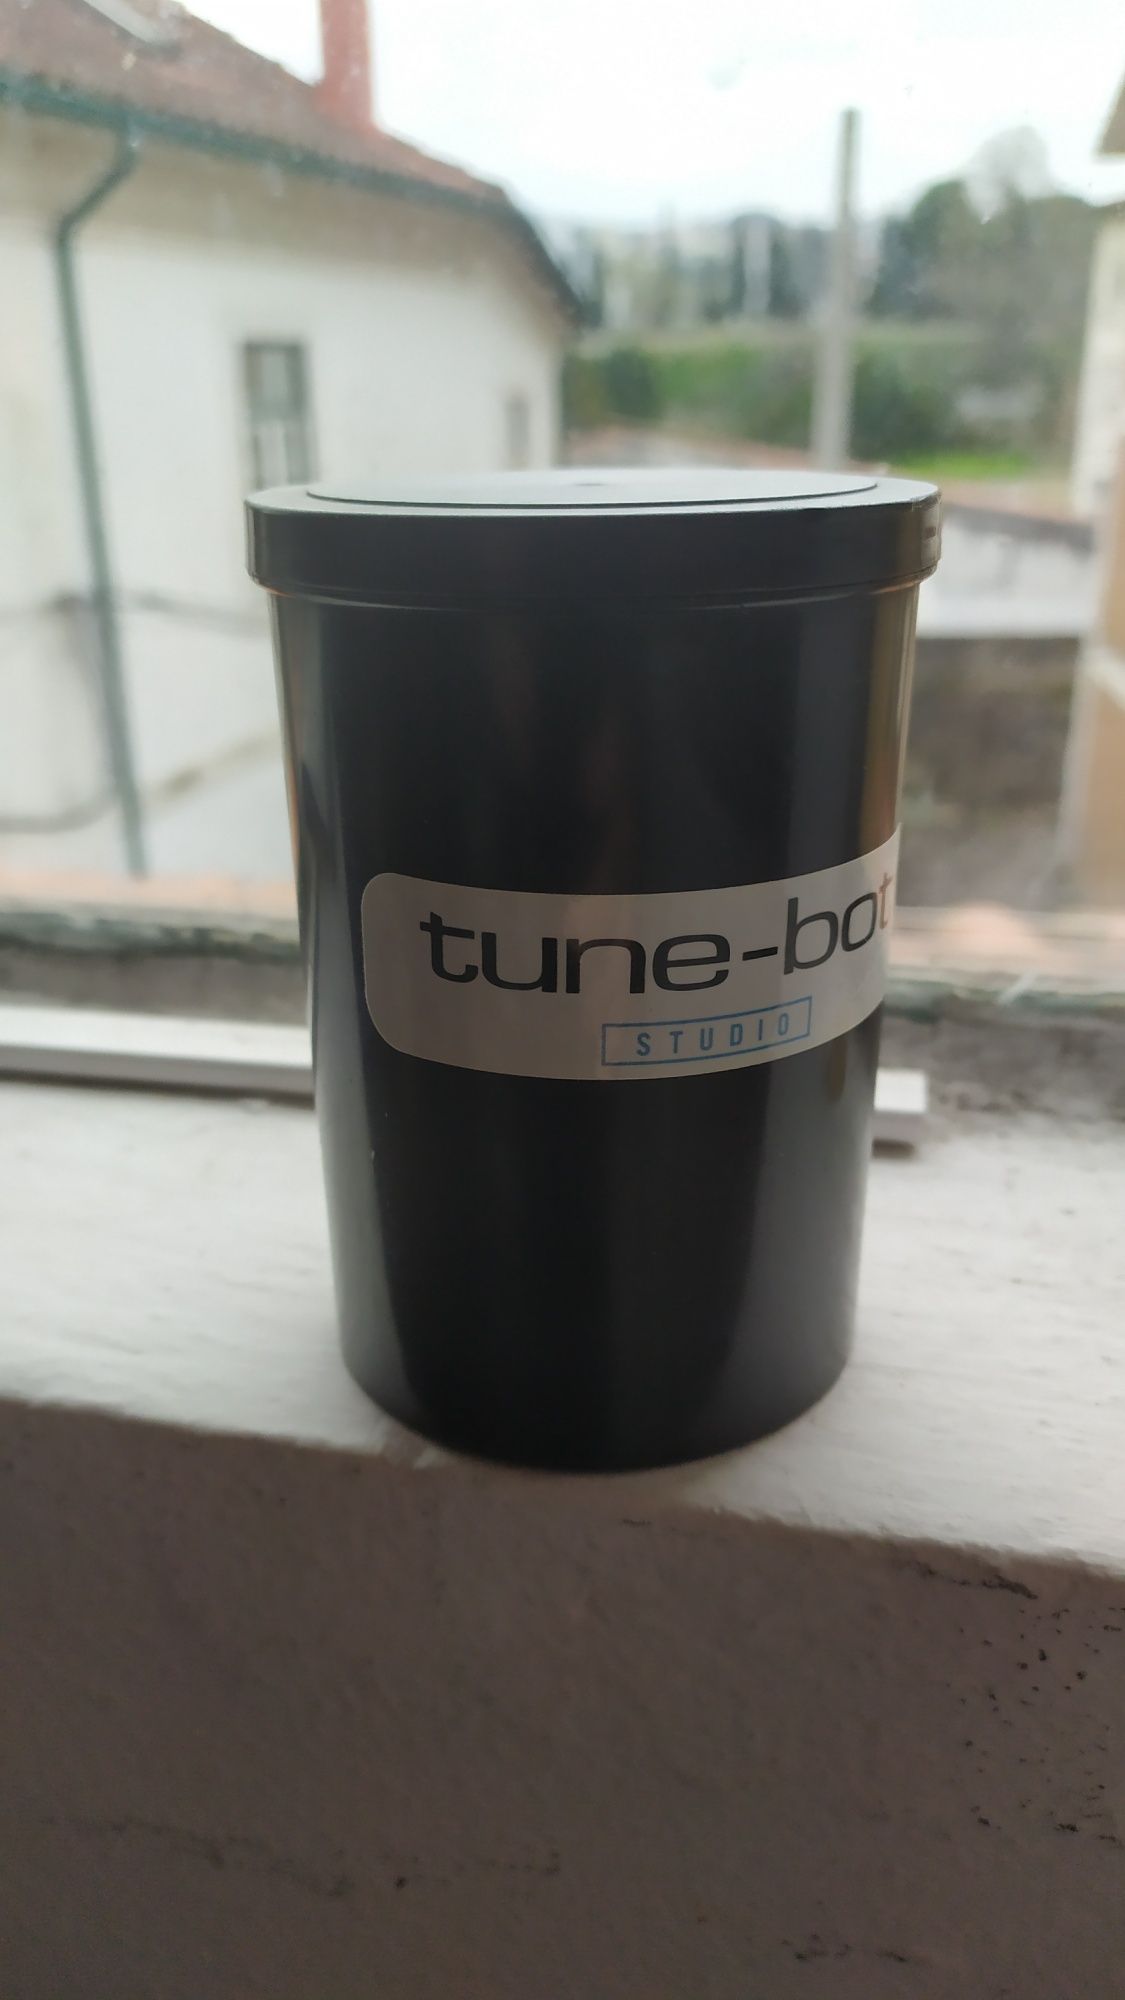 Tune Bot Studio - como novo